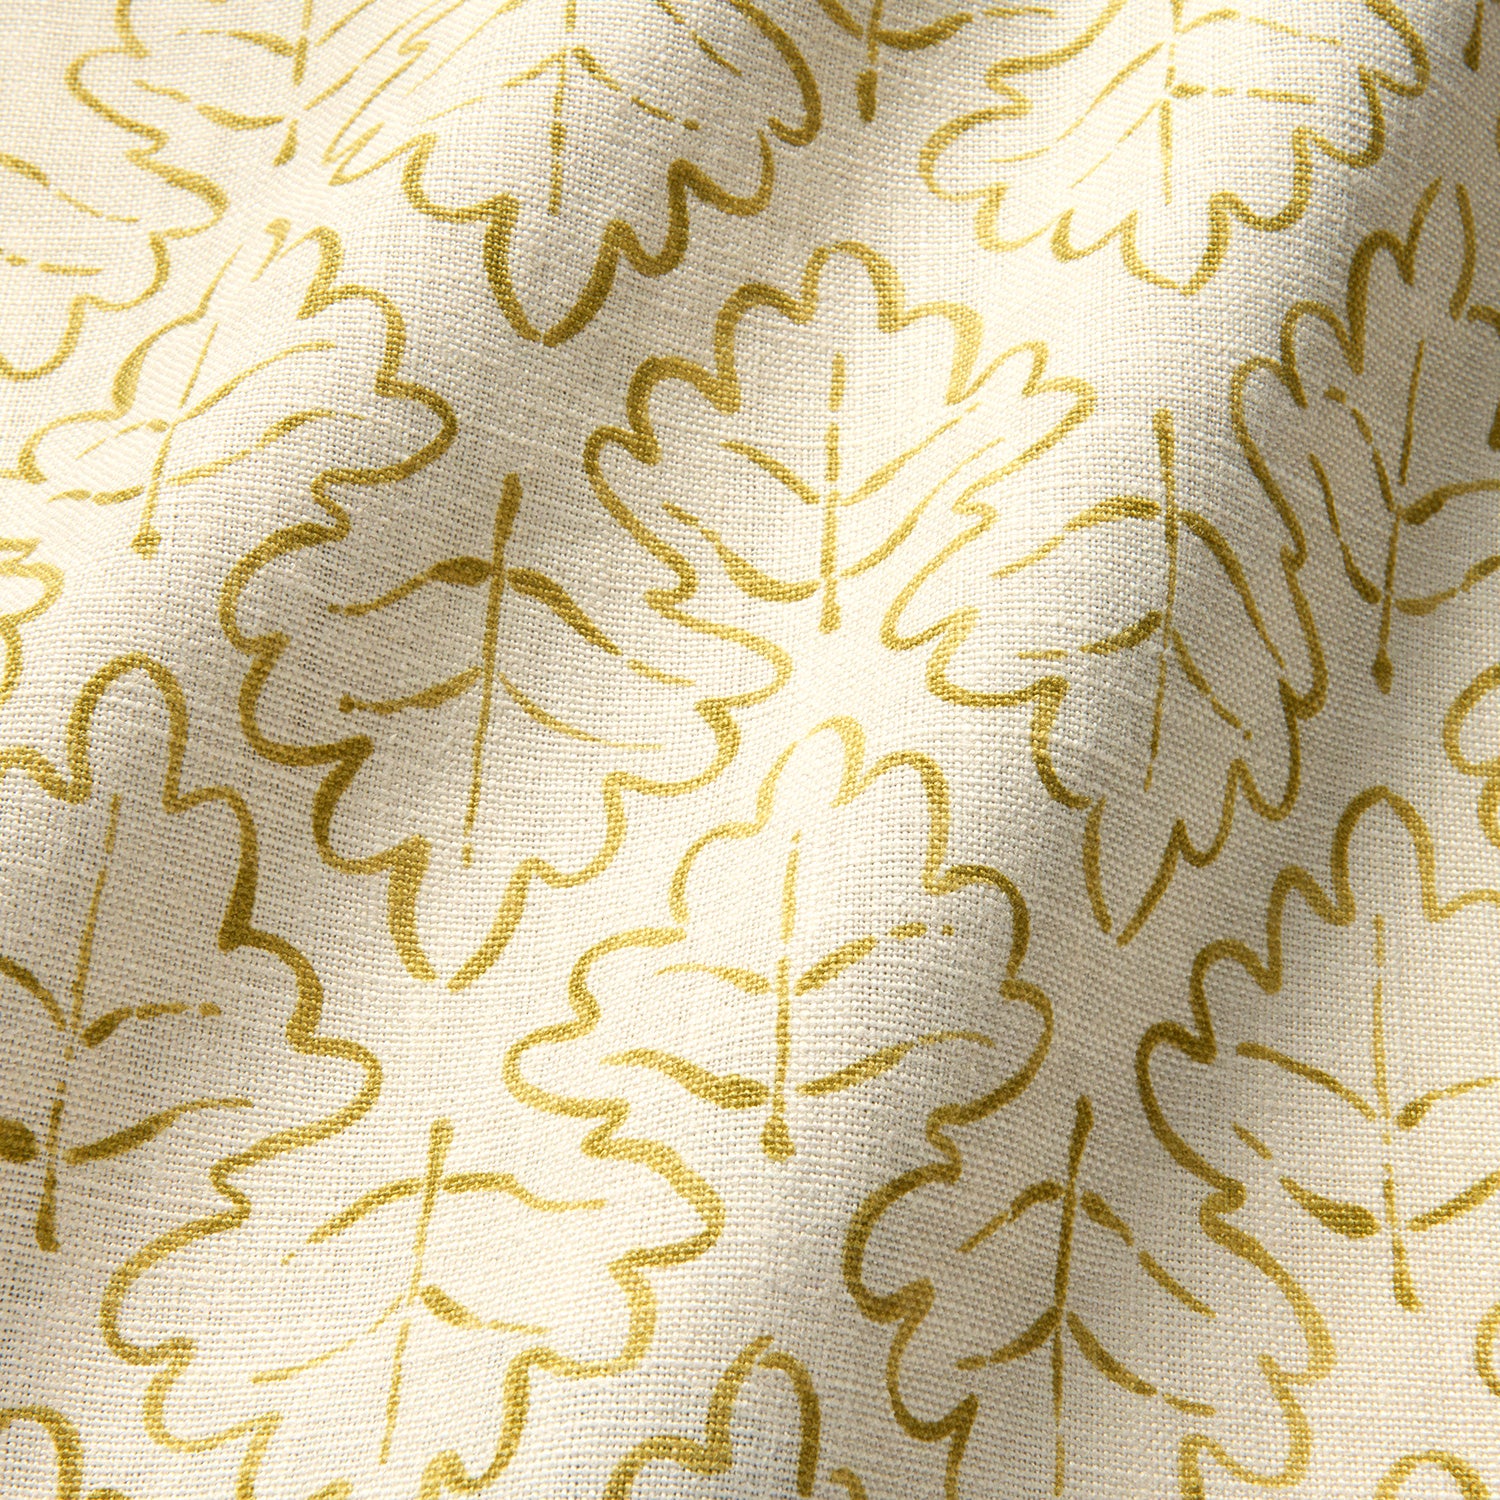 Dots Ochre Linen Style Canvas Fabric